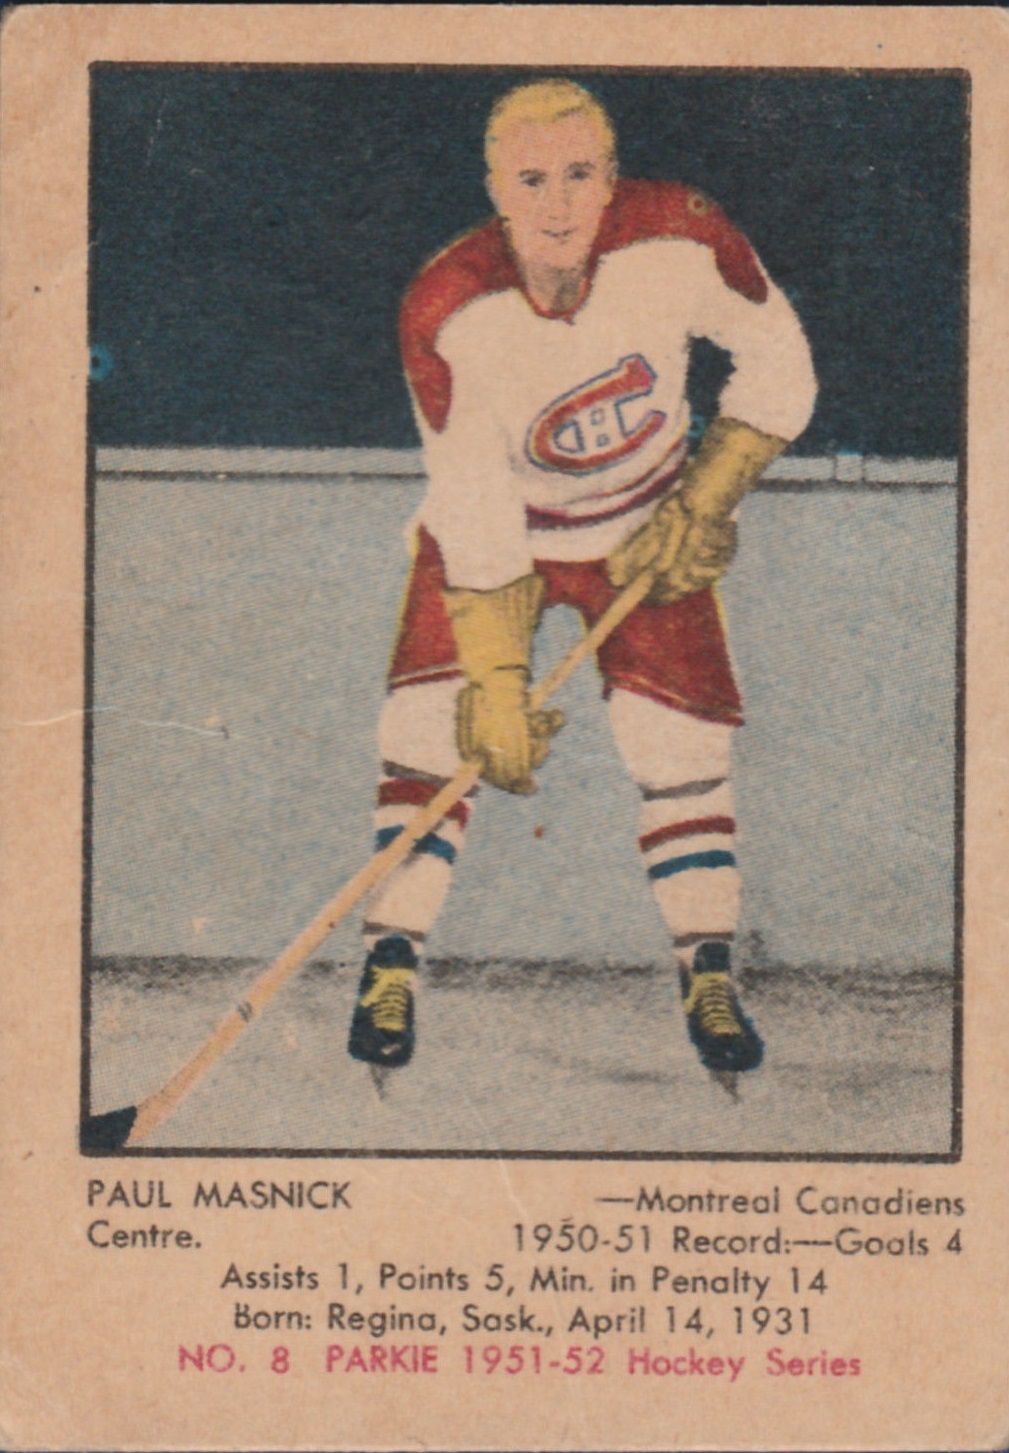  Paul Masnick player image